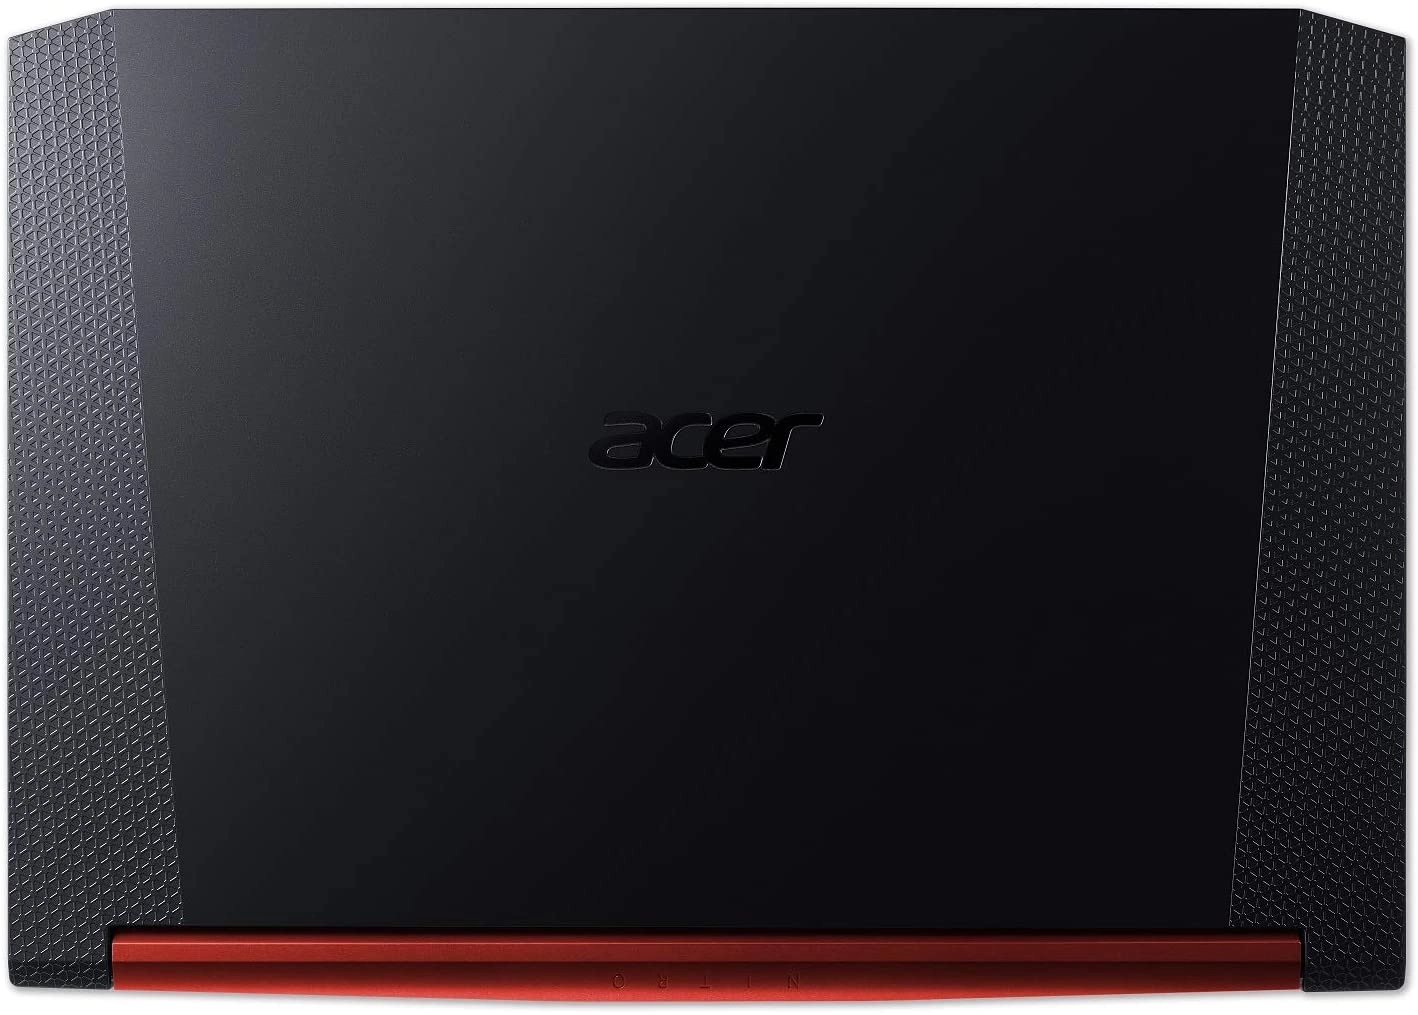 Acer AN515-54-5812 laptop image